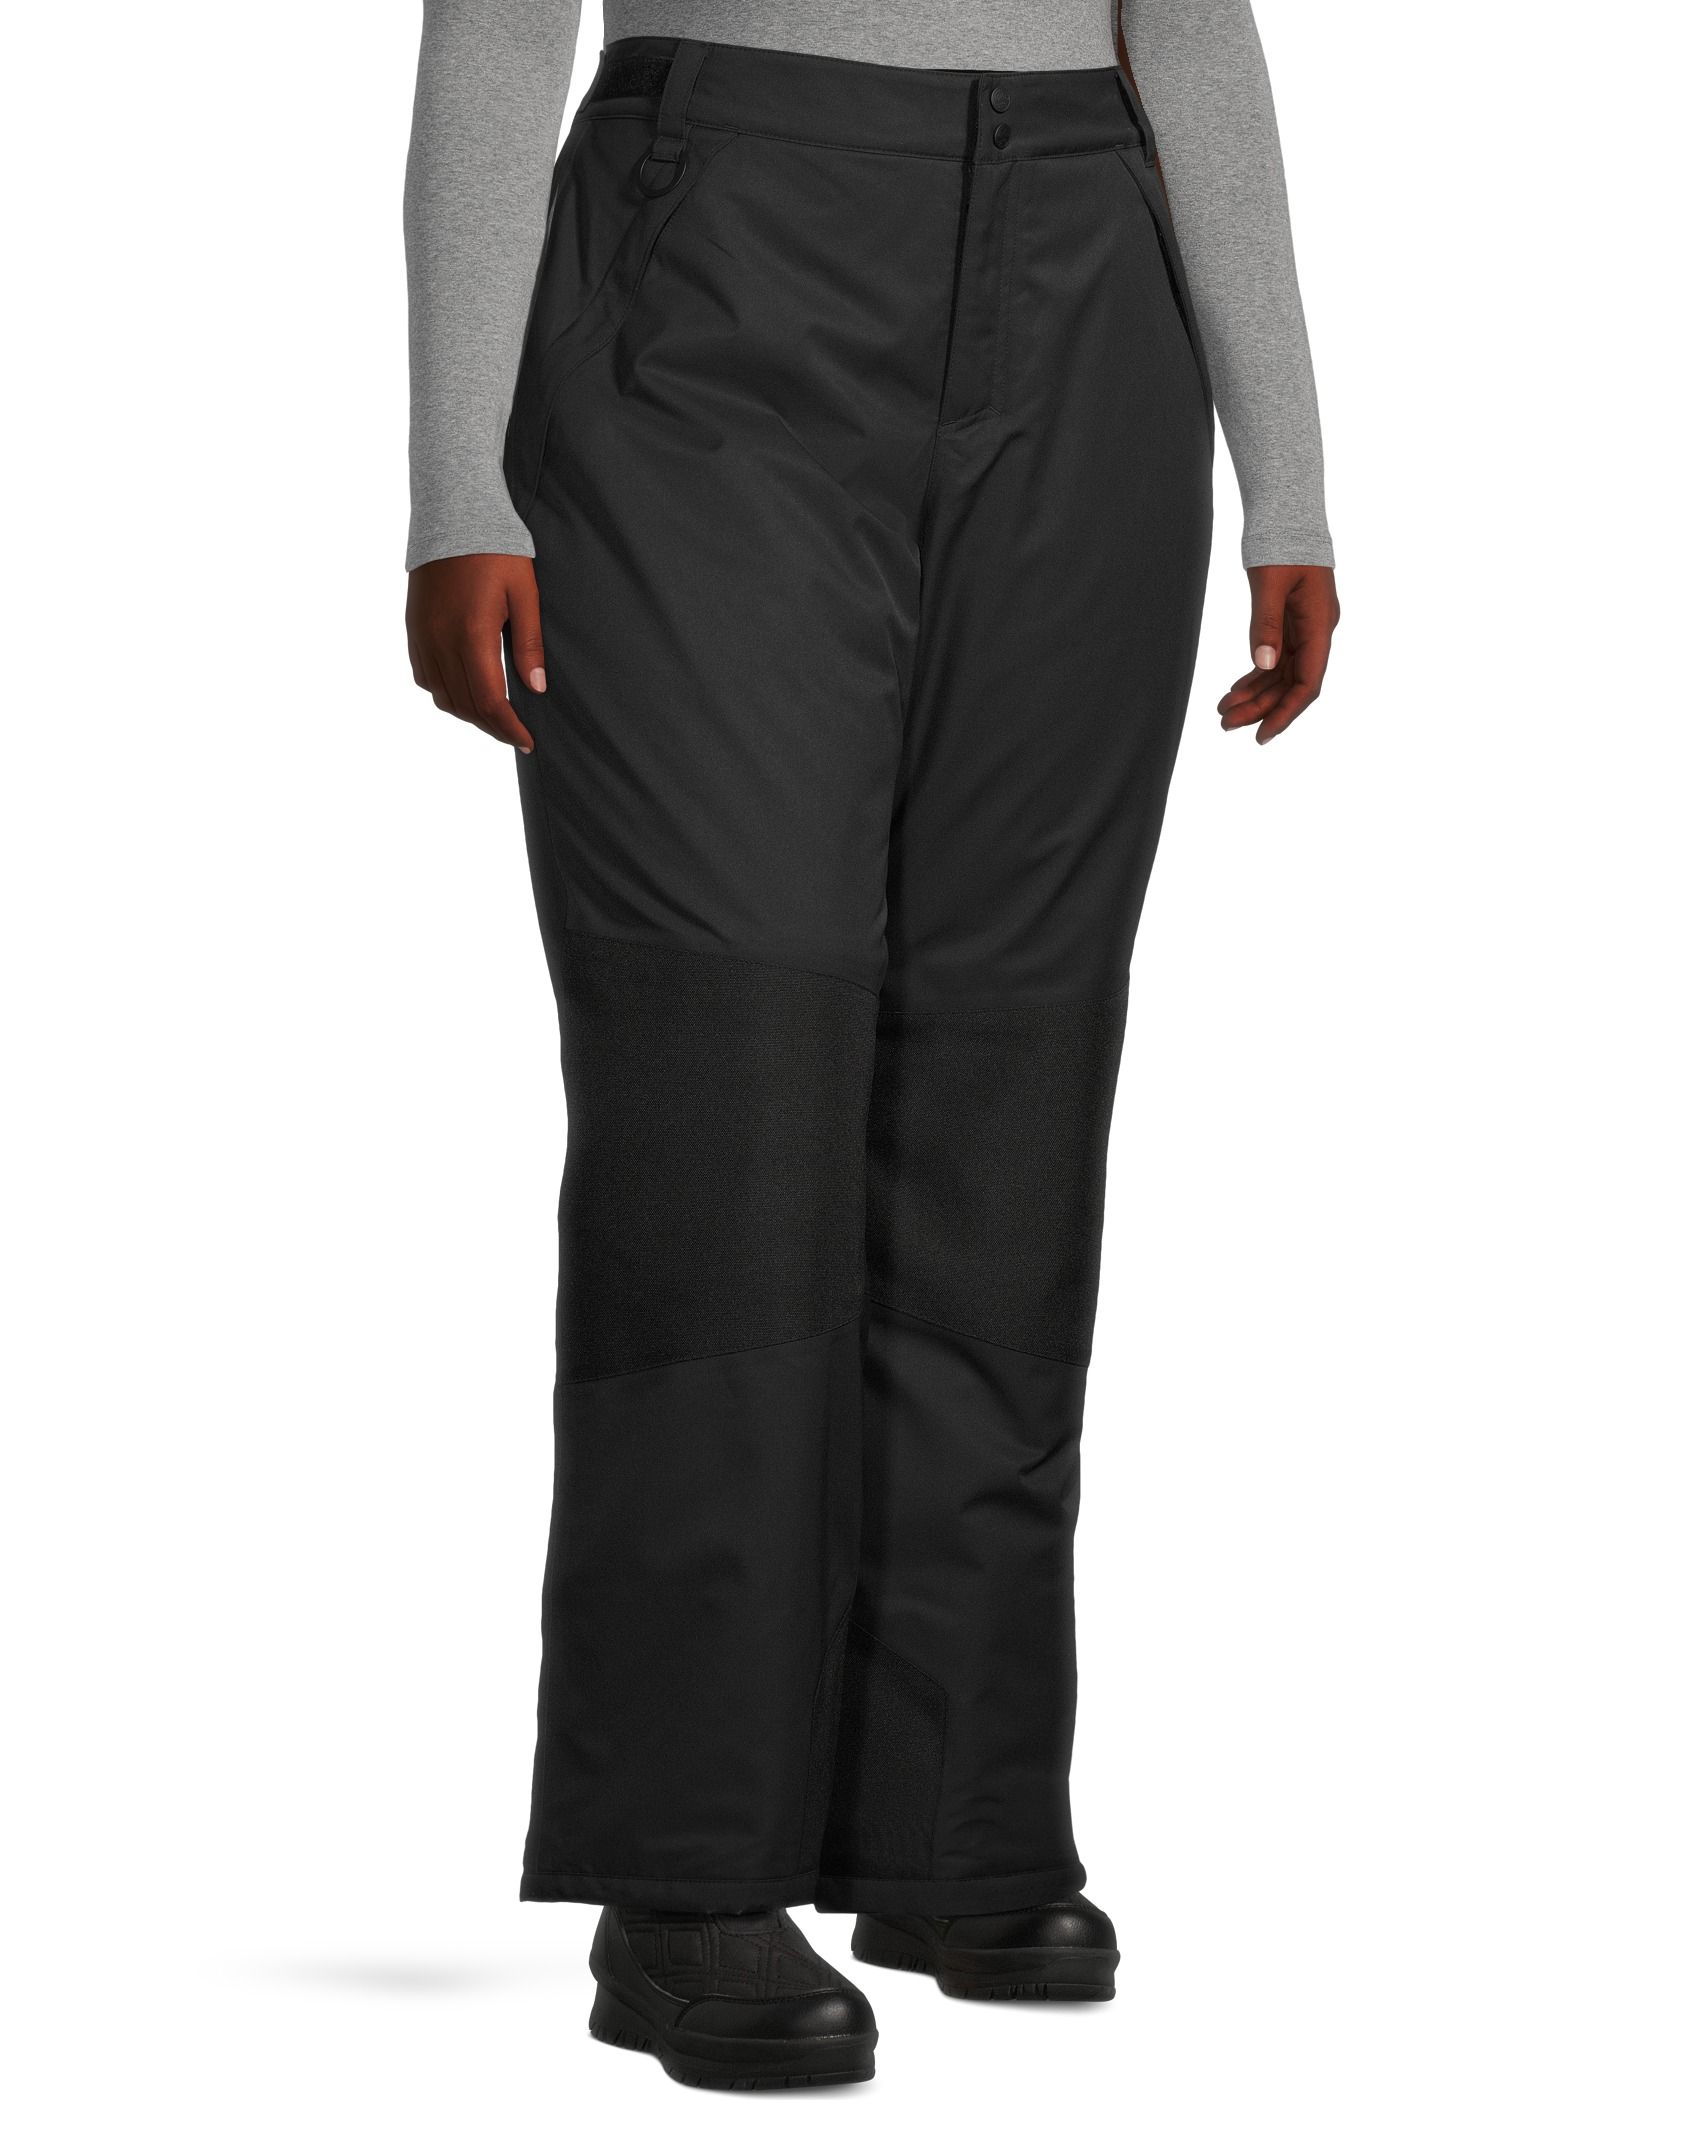 Windriver Women's Hyper-Dri HD2 T-Max Insulated Pants